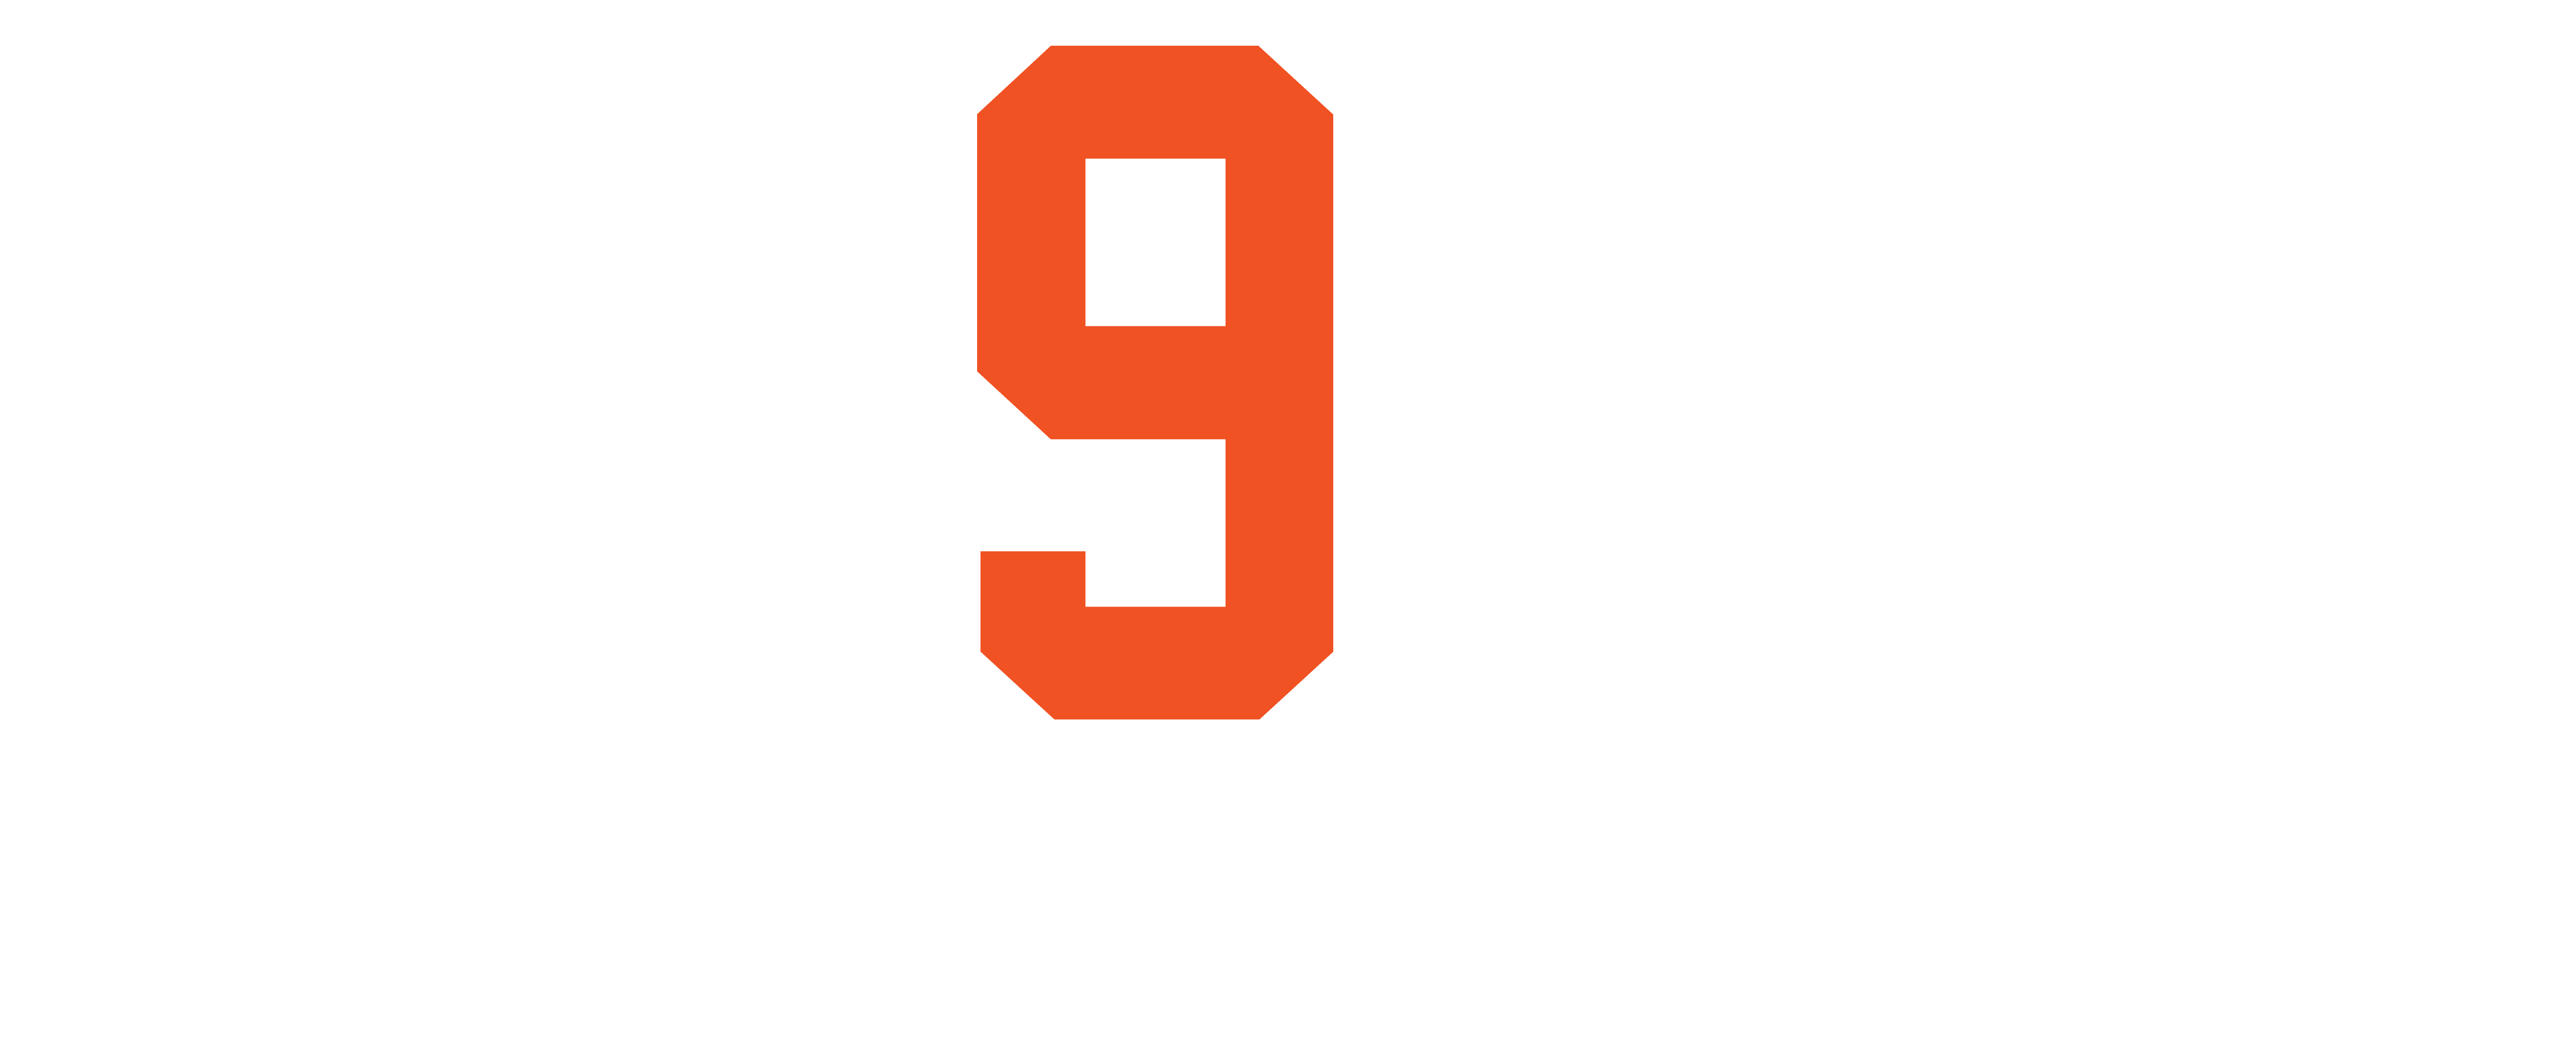 Joe Burrow Foundation's Do Good Logo in White and Orange